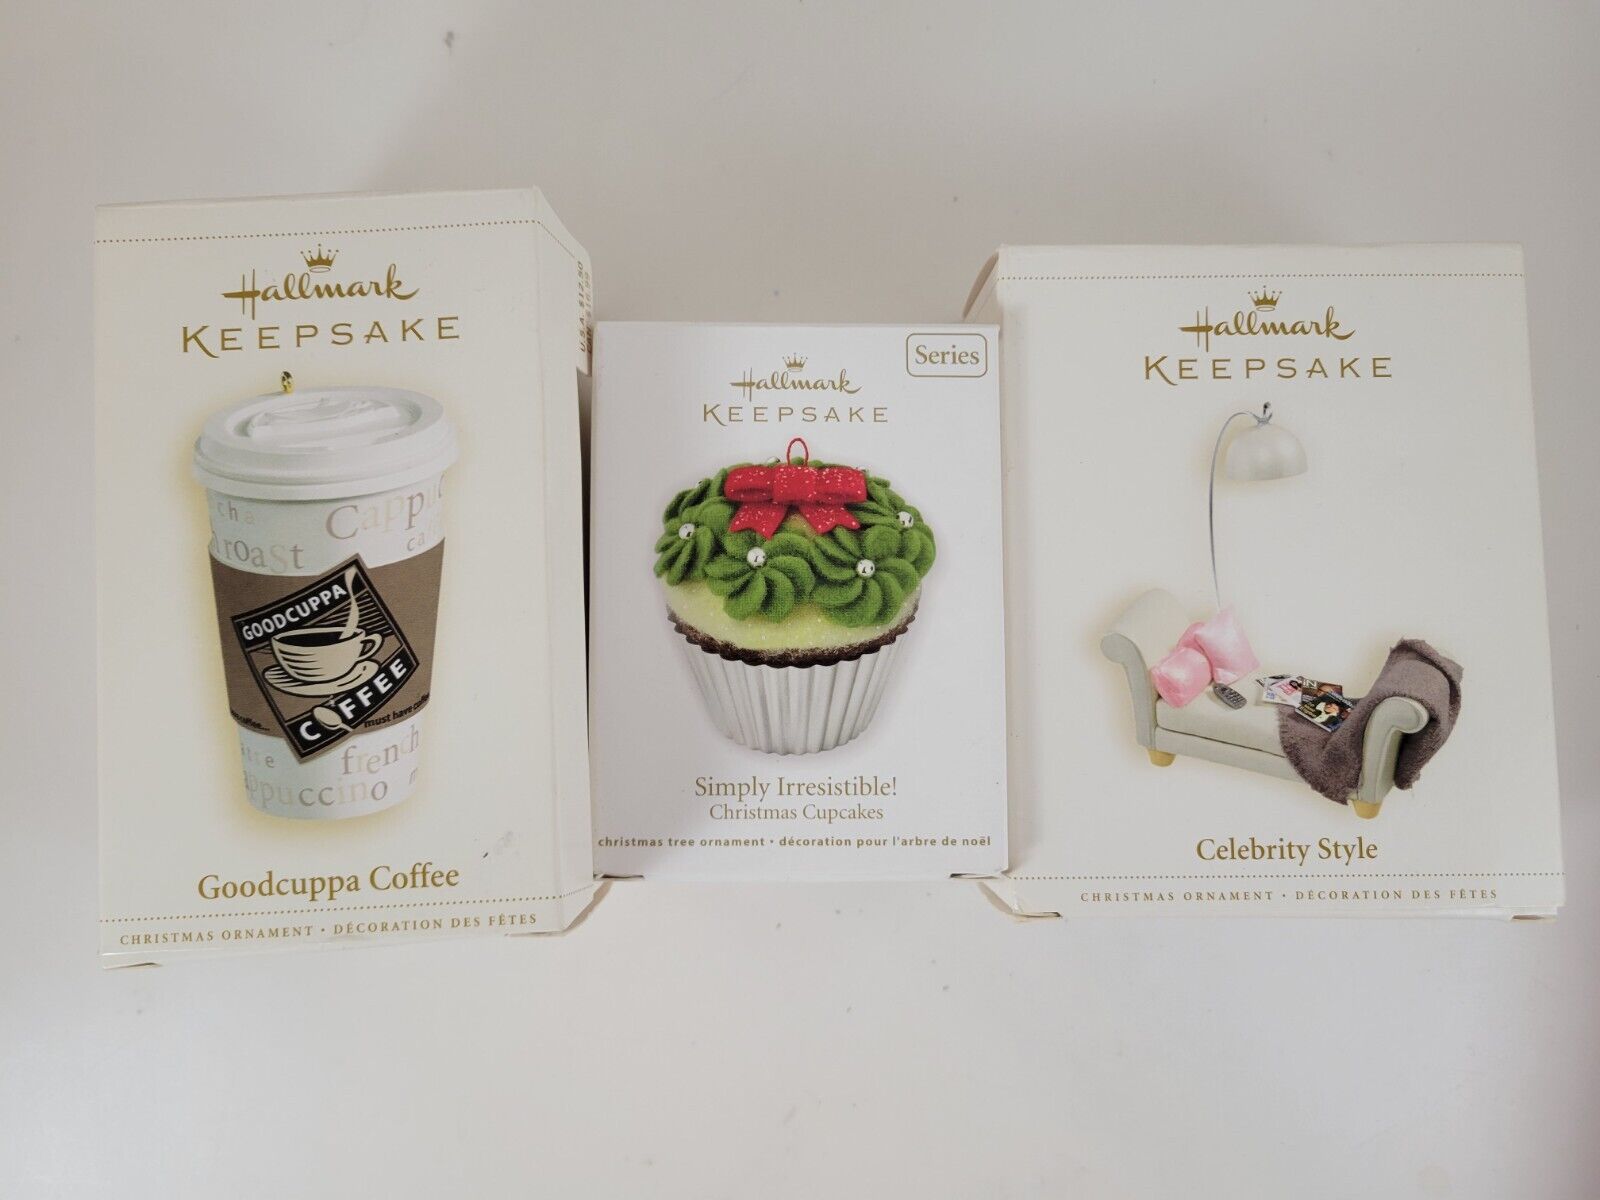 3 Hallmark Keepsake Ornaments - Celebrity Style, Coffee Cup & Cupcake